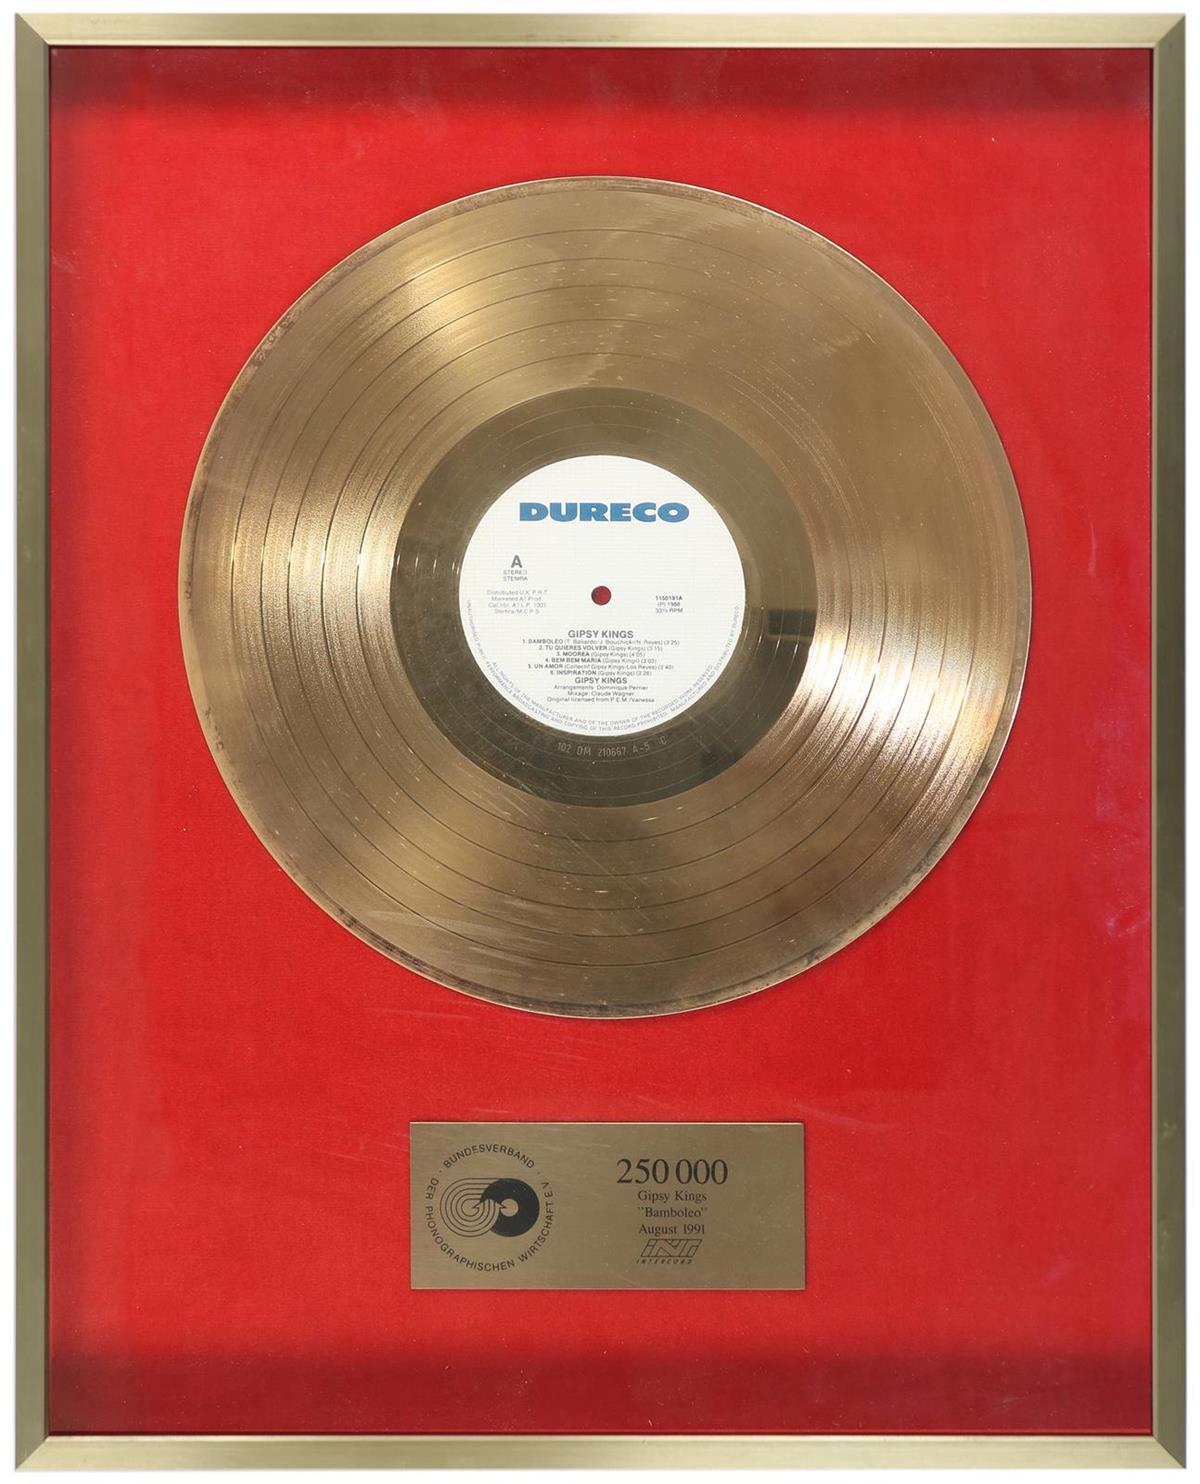 Goldene Schallplatte, | Bild Nr.1